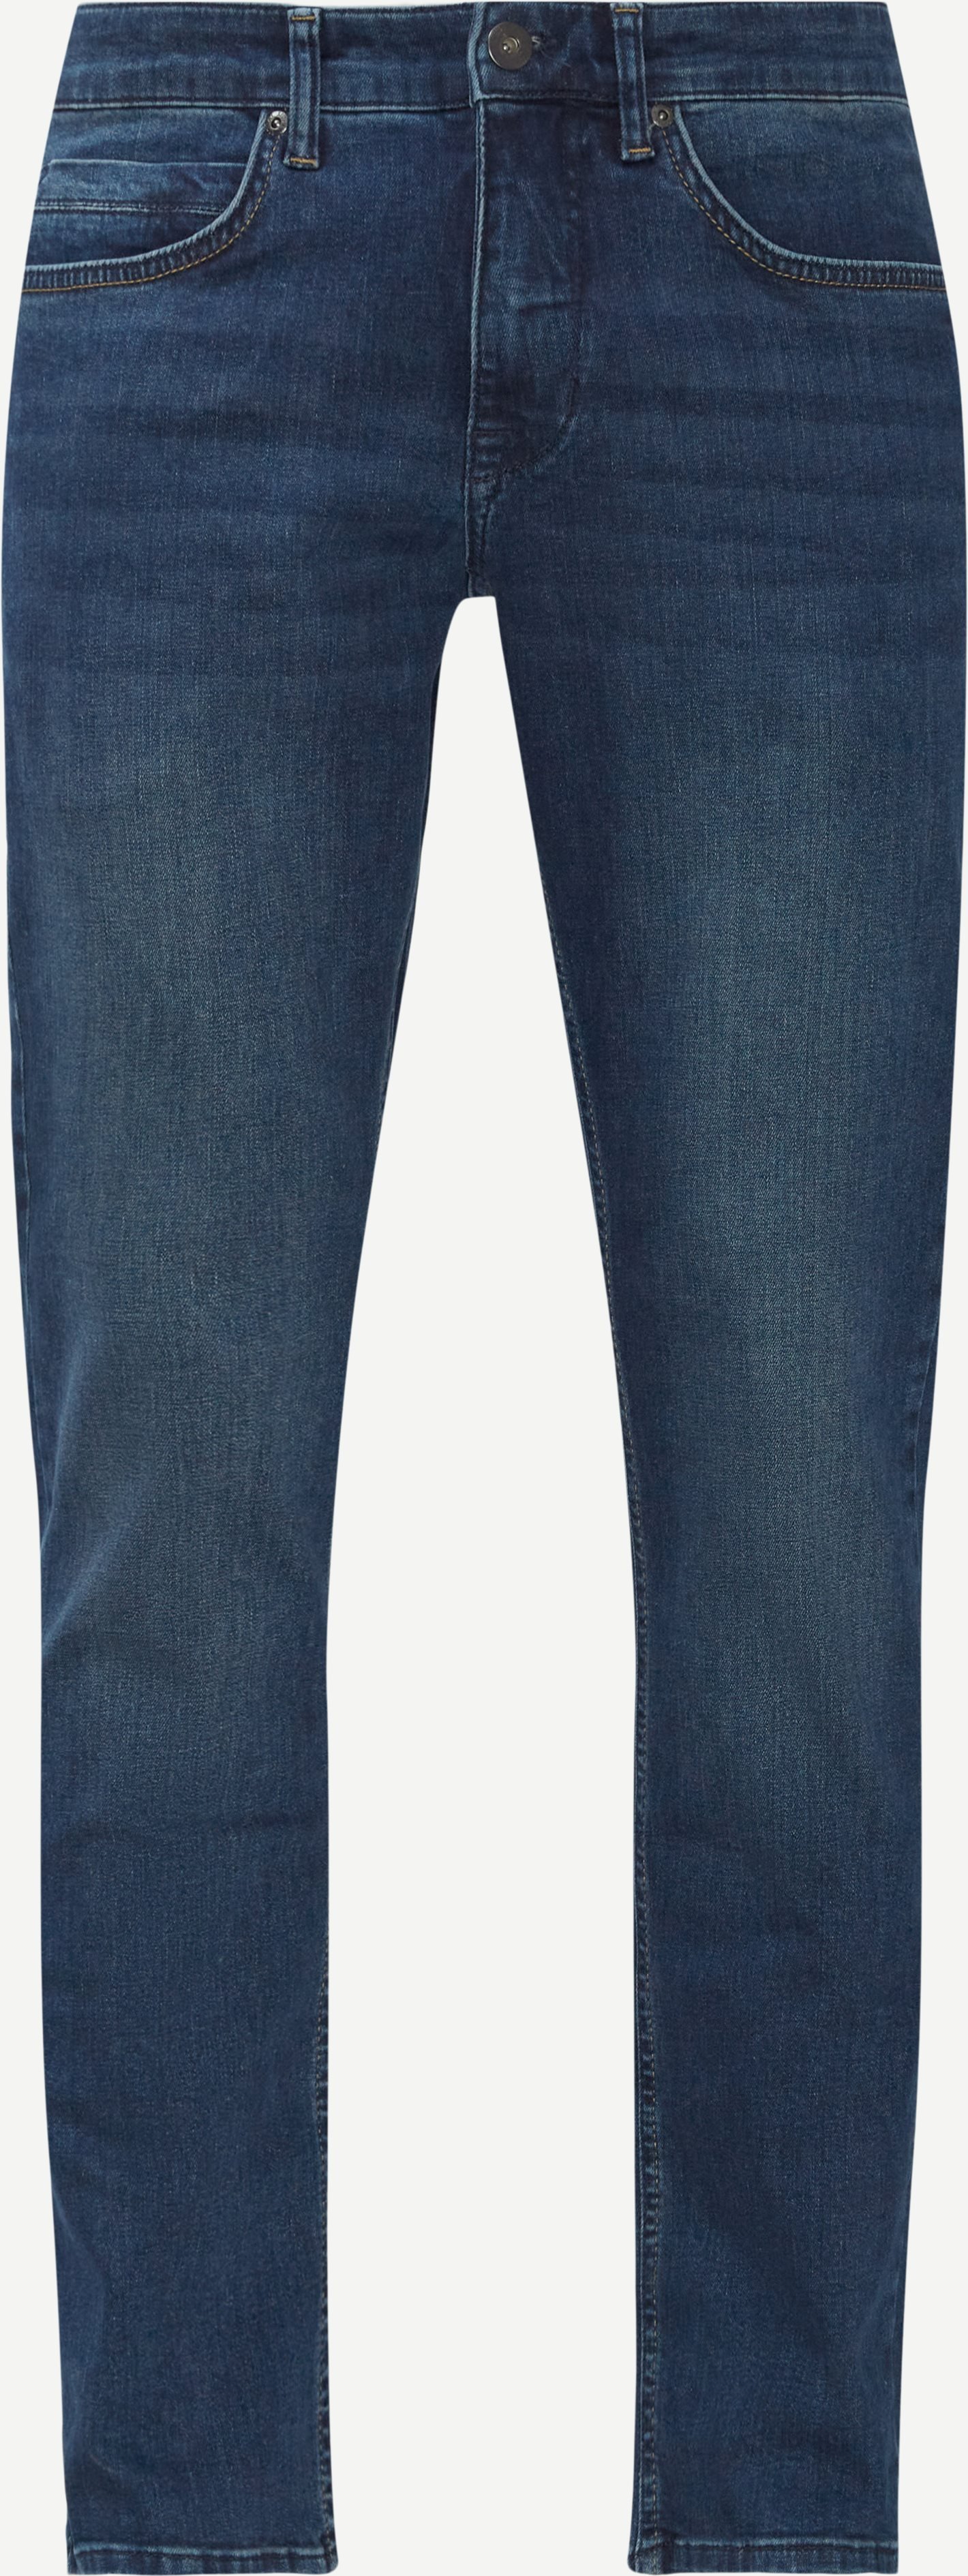 Ferry Denim Jeans - Jeans - Tapered fit - Denim